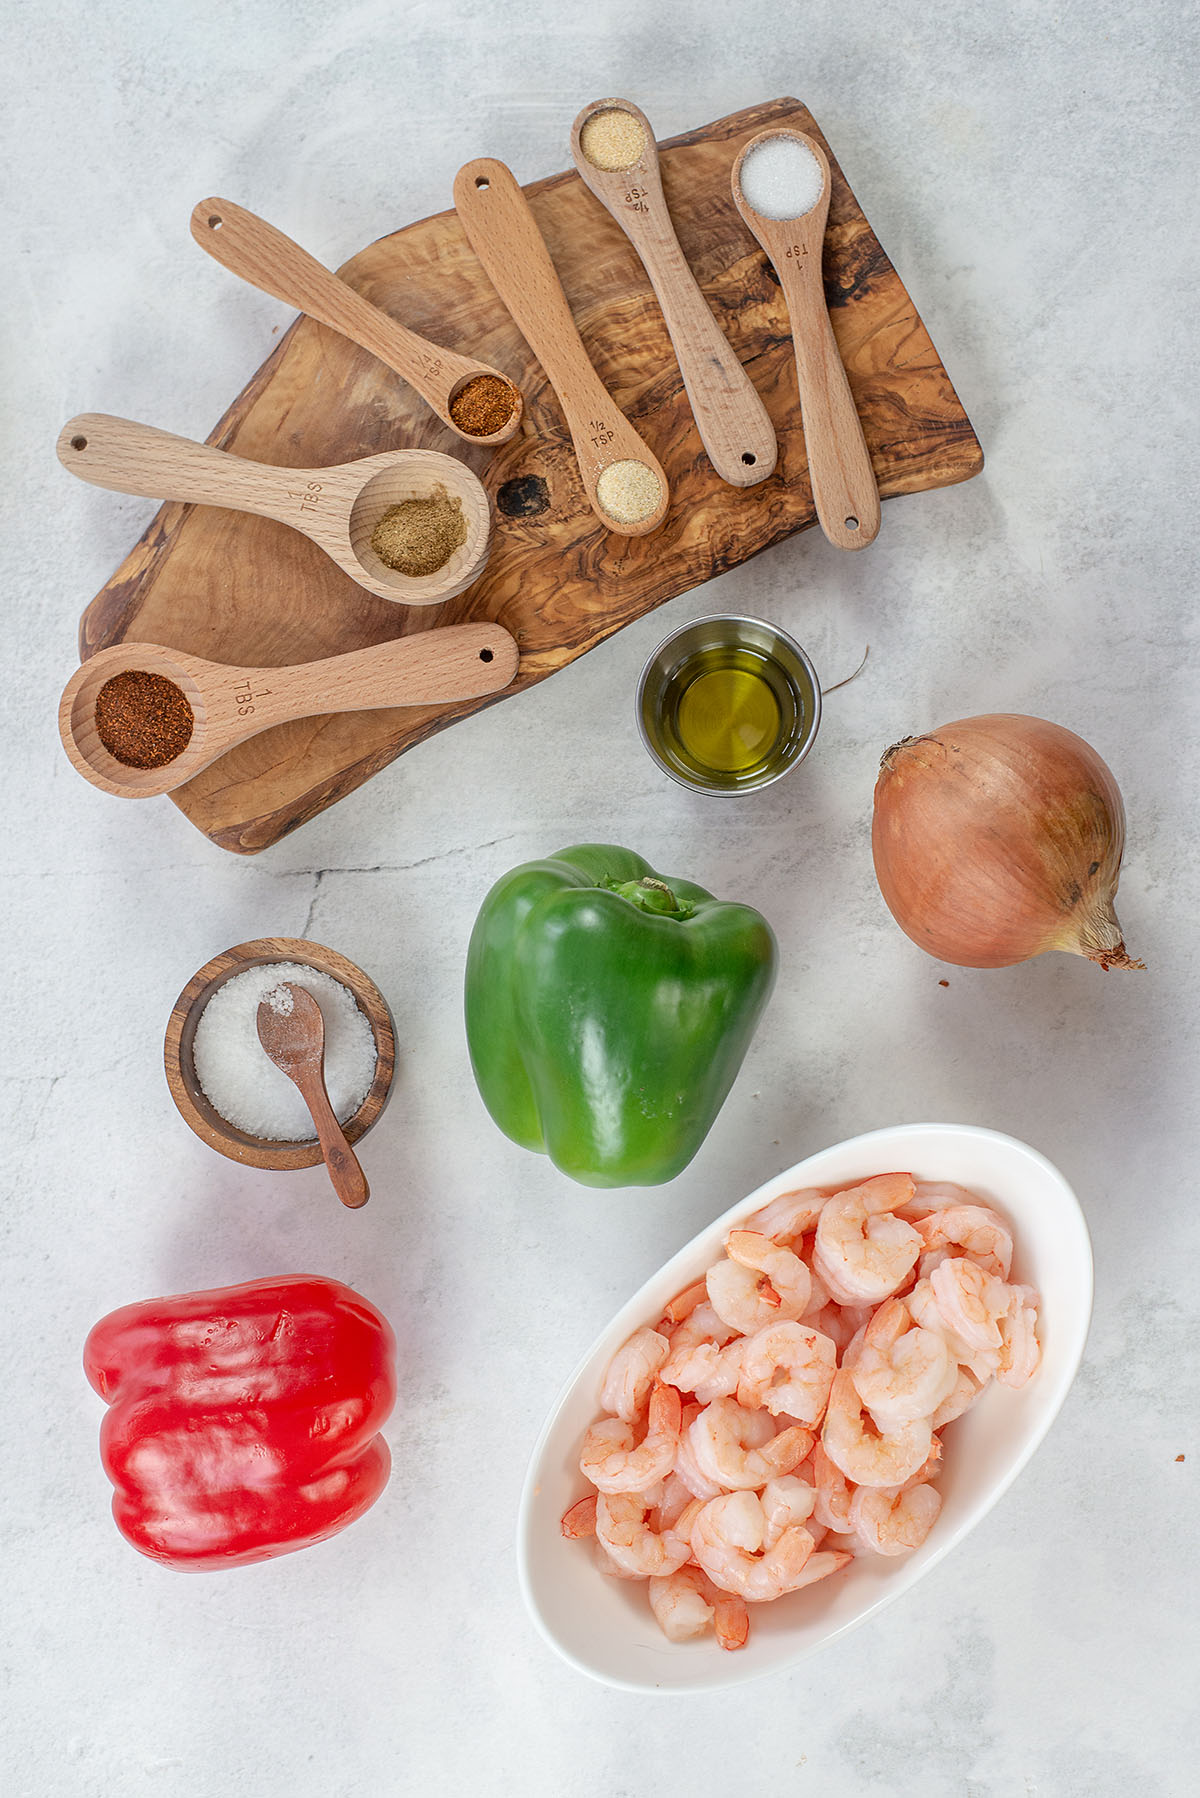 Shrimp fajita ingredients spread out on a countertop.